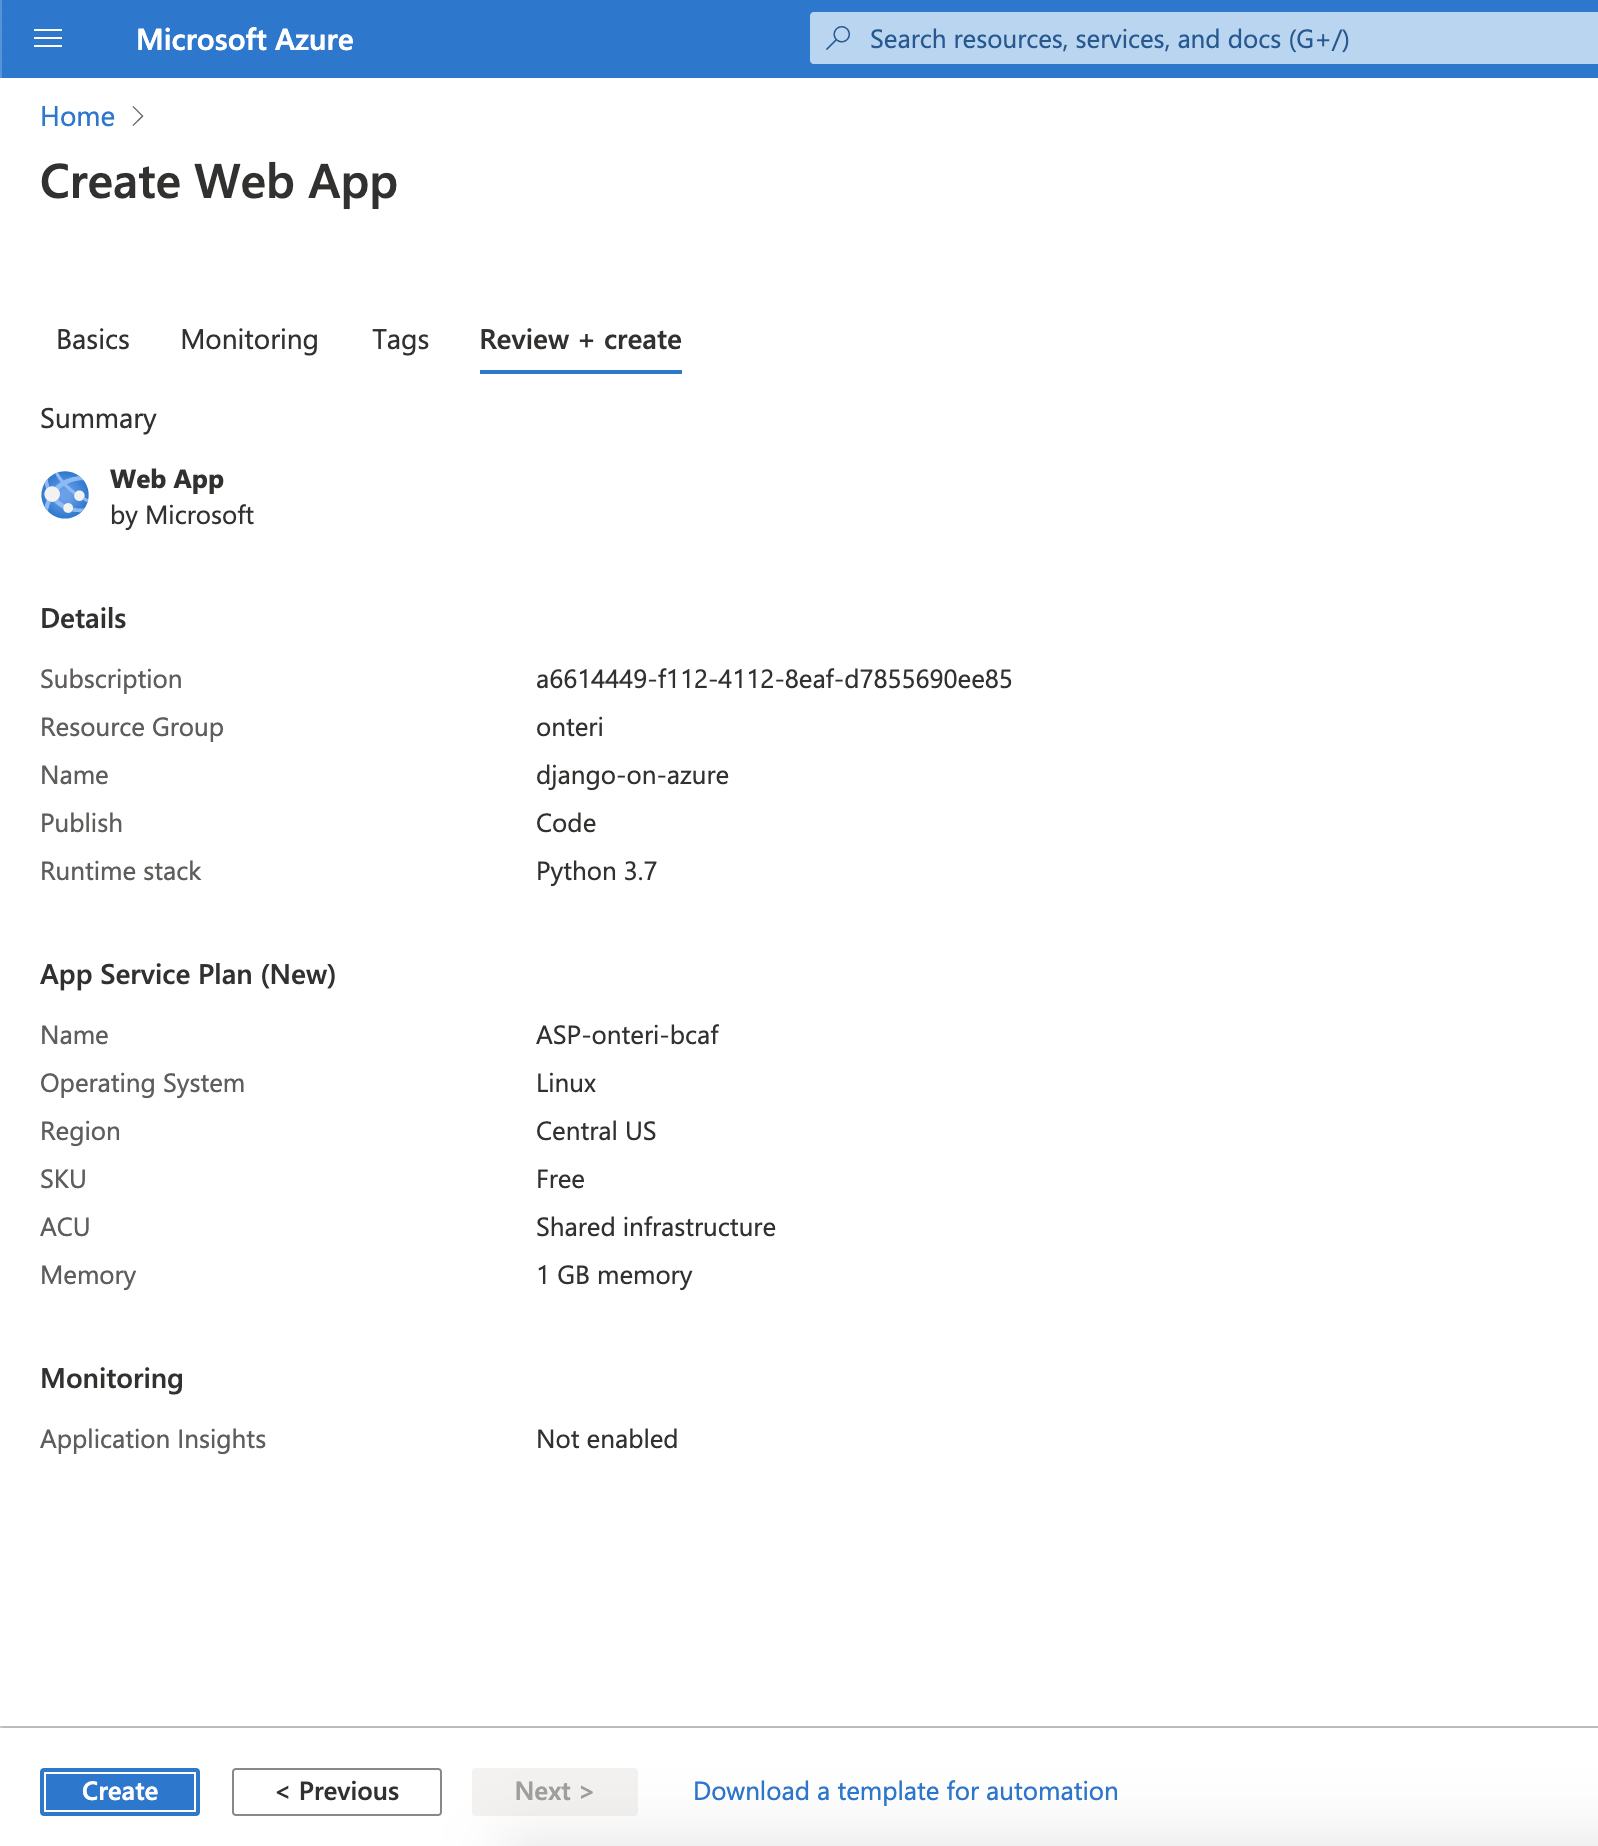 Azure App Service review & create